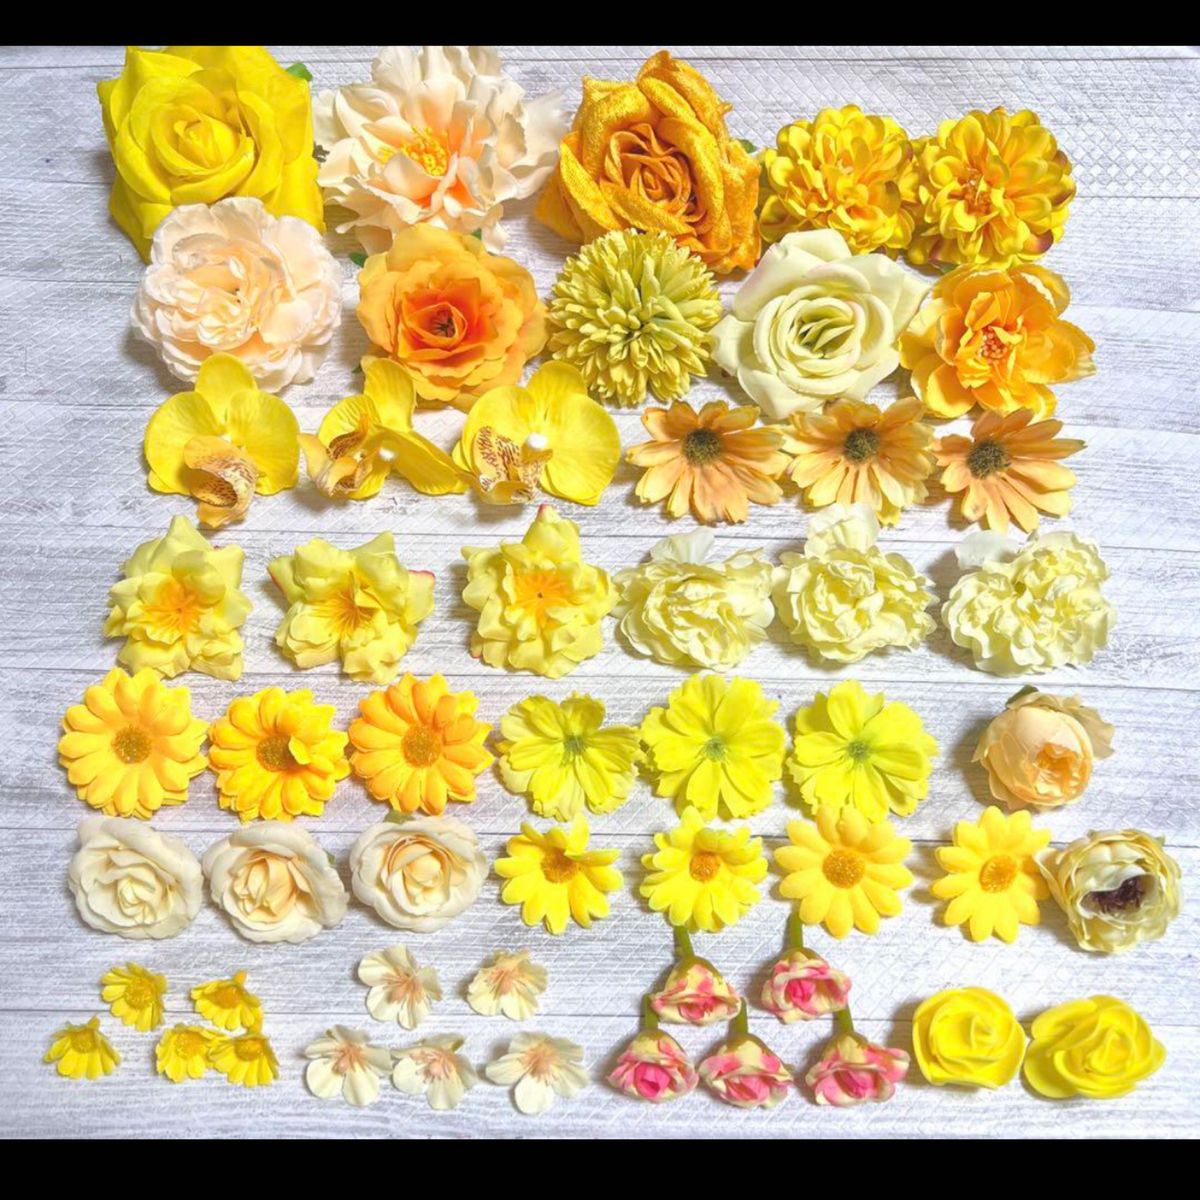 NO 0910-03 造花 花材 まとめ売り ハンドメイド 素材 セット 花 アーティフィシャルフラワー リース 黄色いバラ